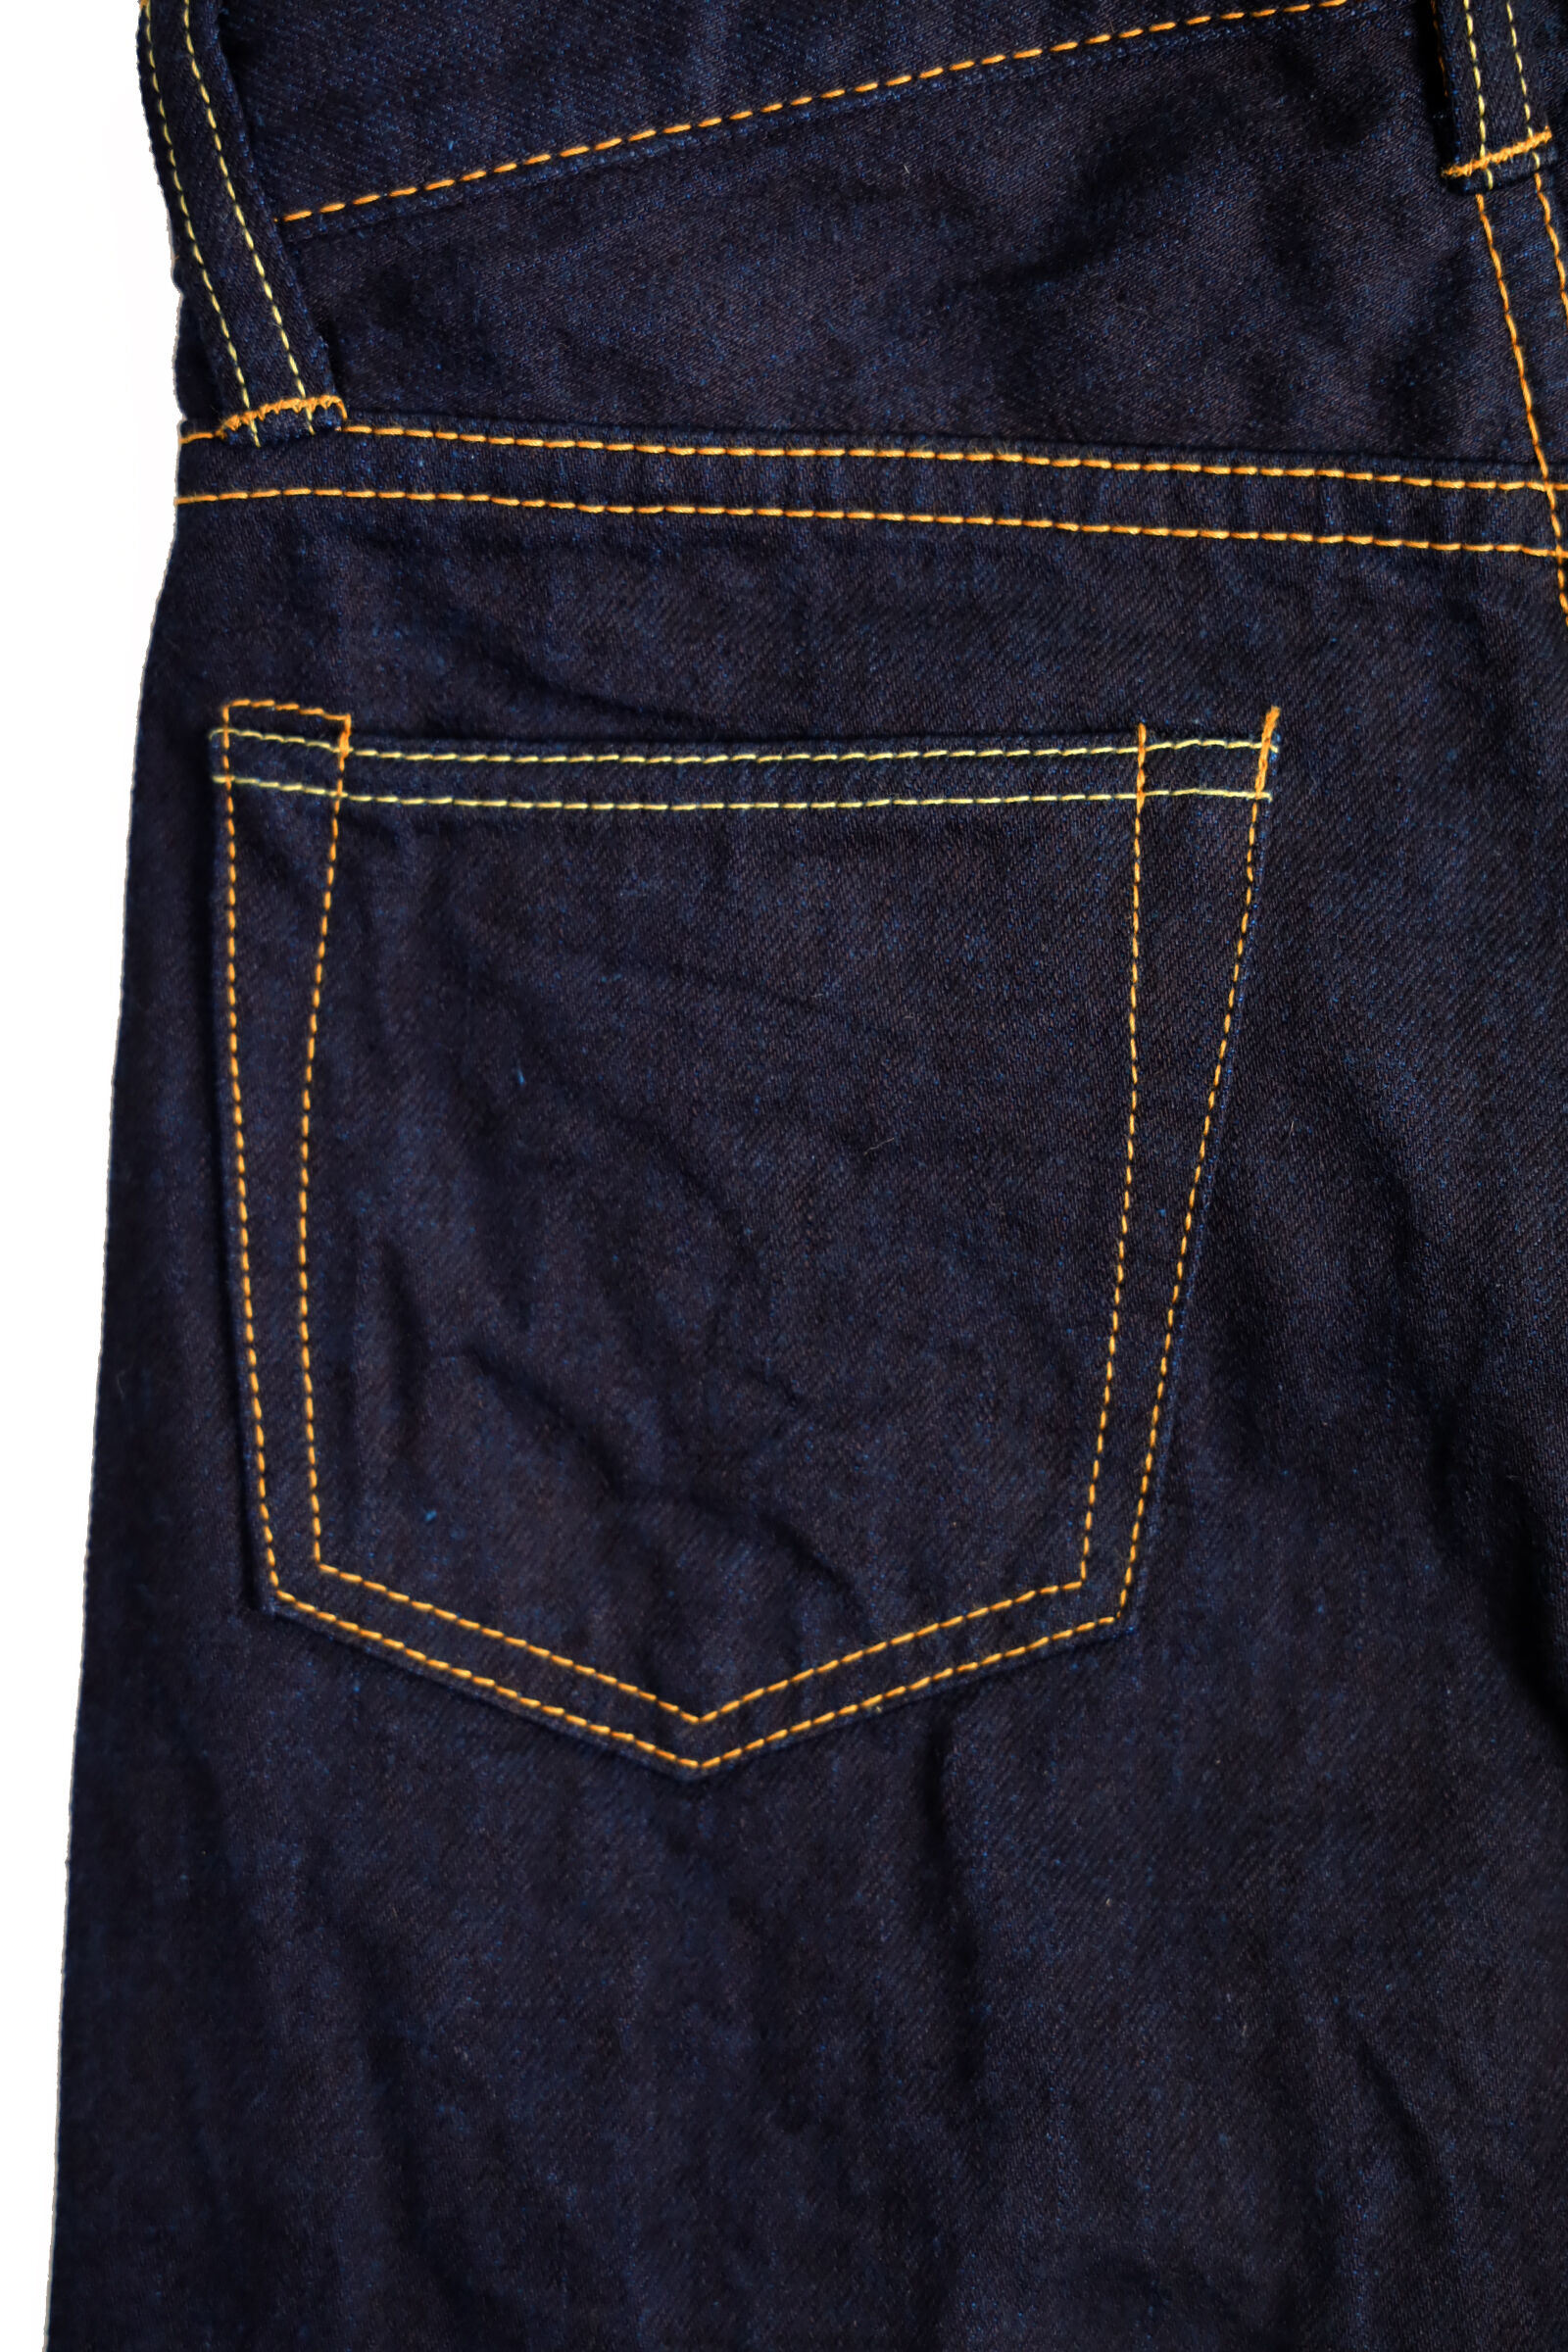 Chaps Denim Jeans Women's Size 10- Cobalt Blue- Garbo Bootcut 5 Pocket NWT  | eBay